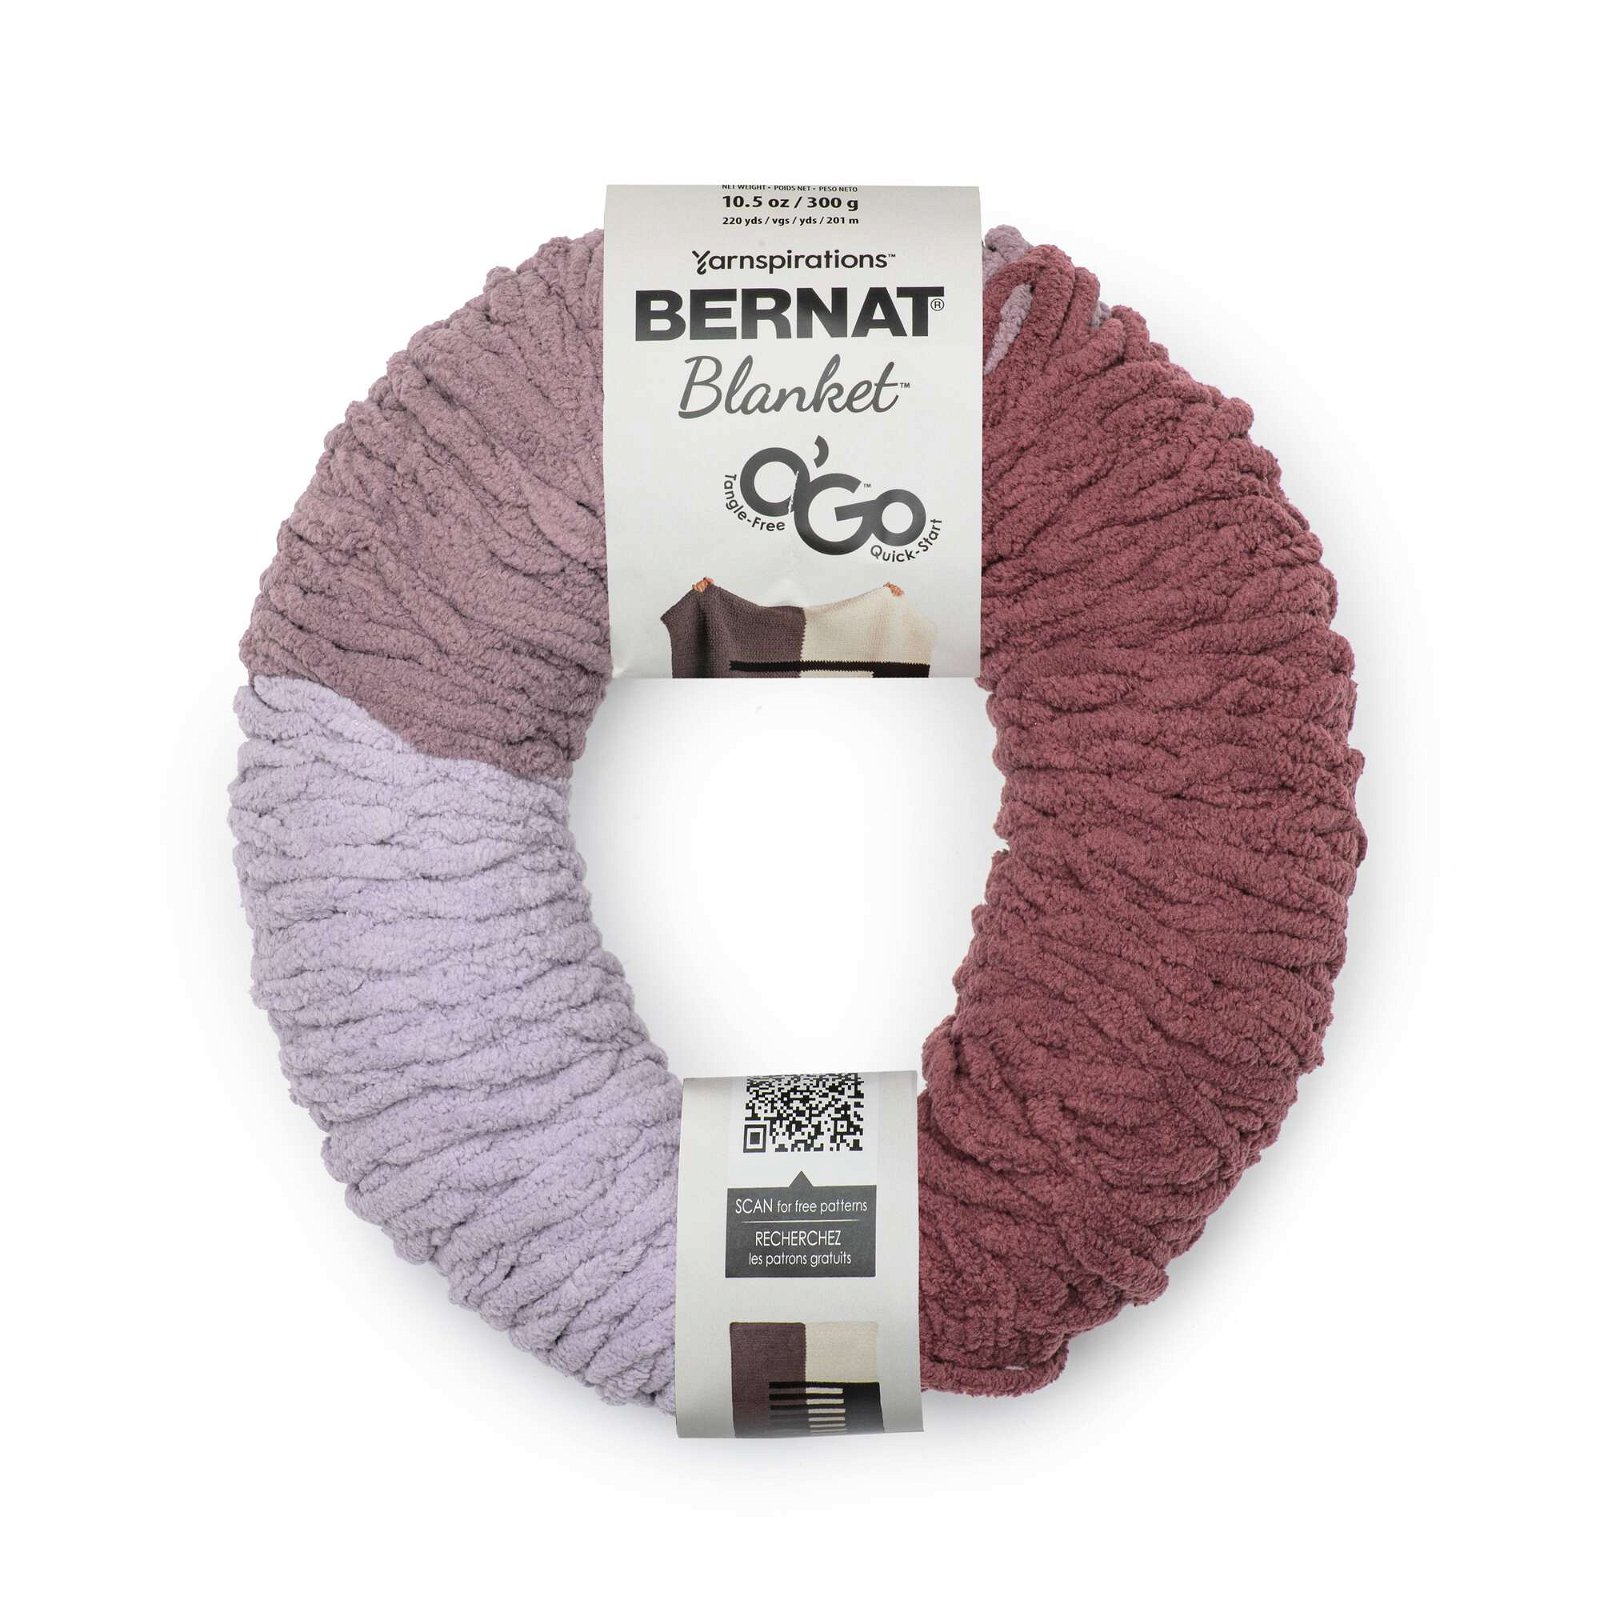 Bernat Blanket O'Go Yarn, Purple Plum